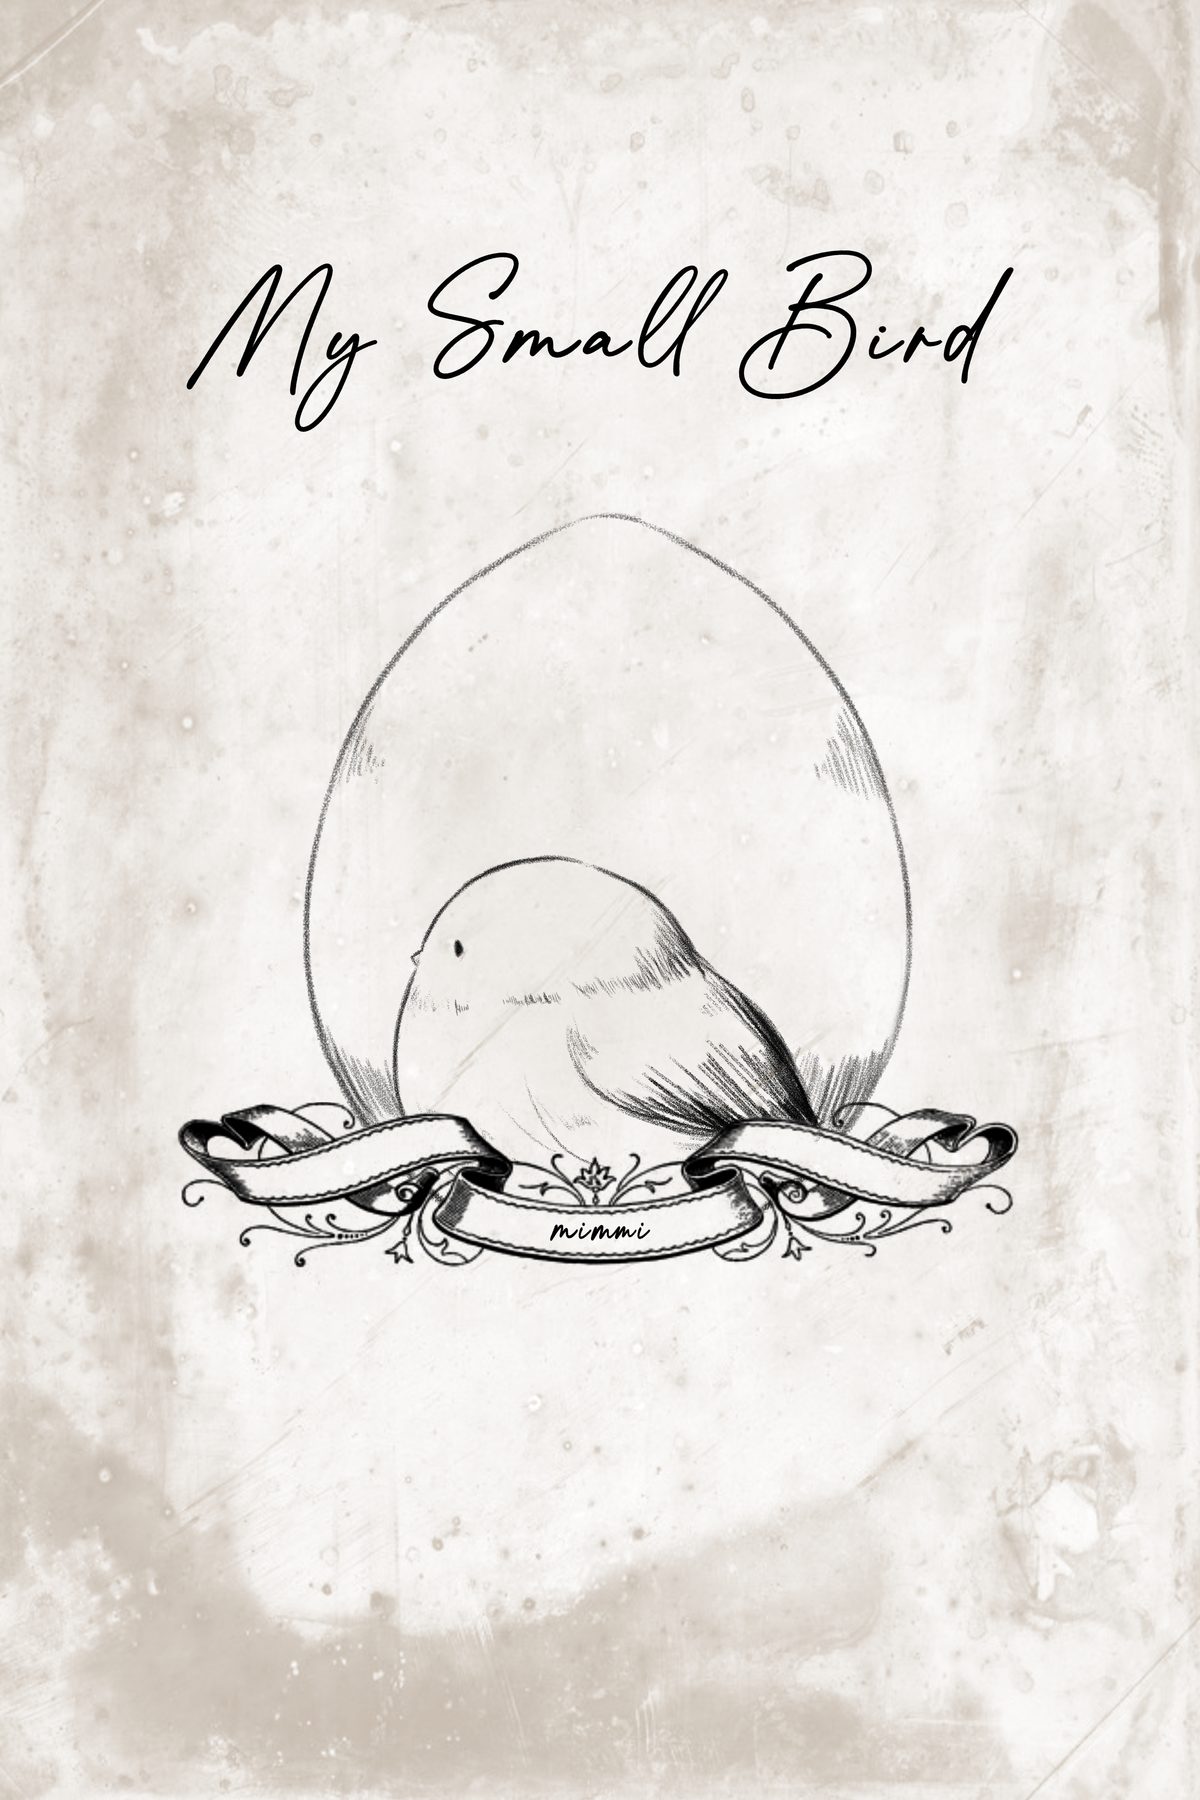 Mimmi 밈미 Vol 2 My Small Bird A 0001 9183644568.jpg